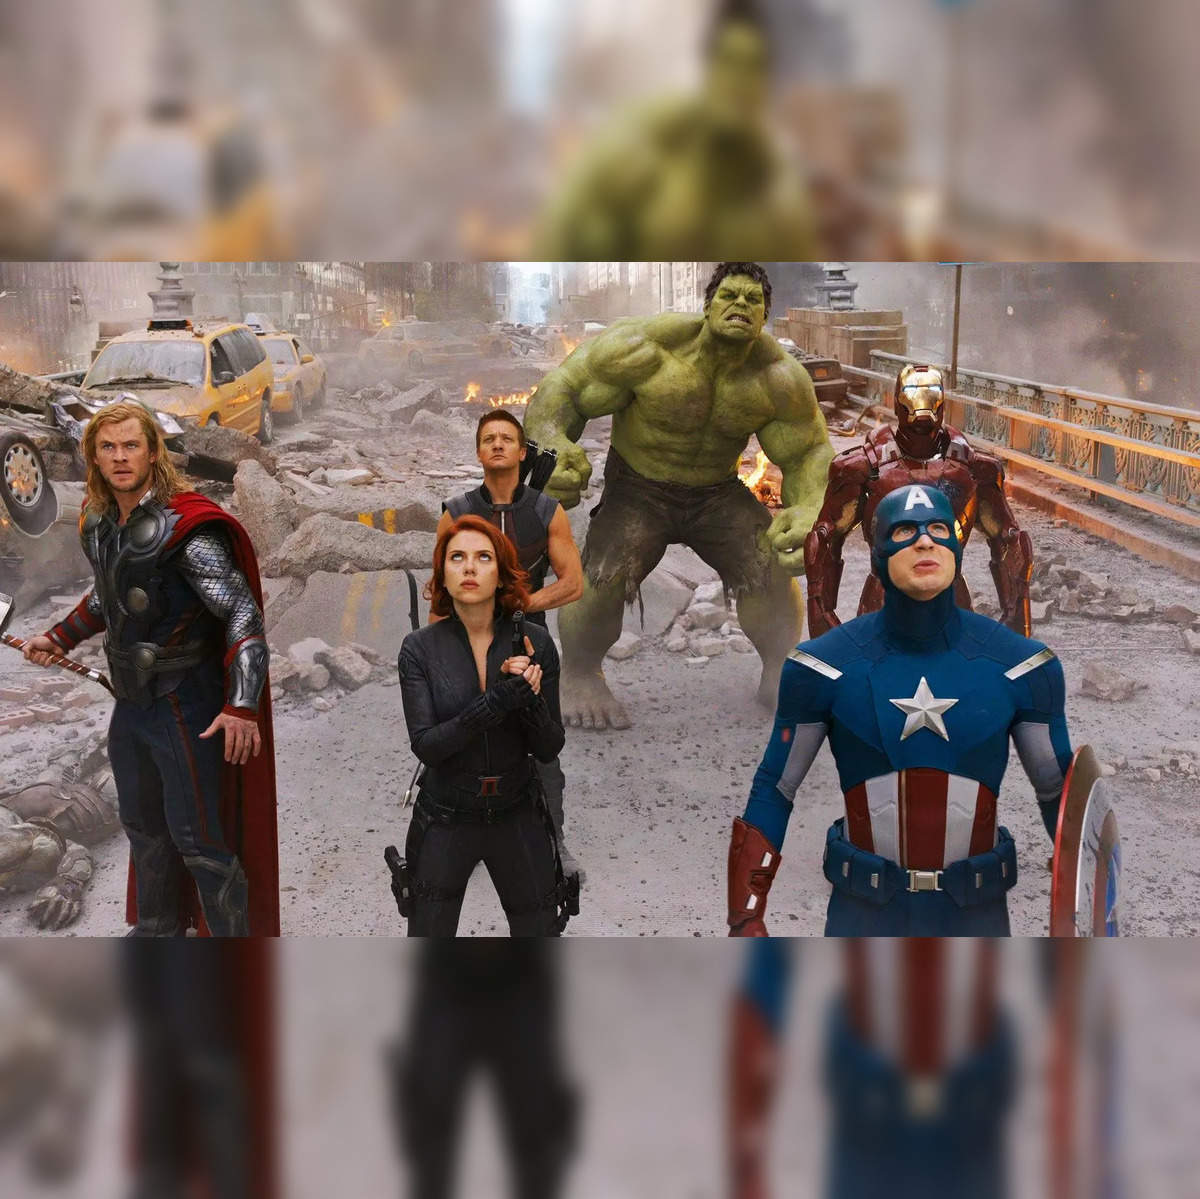 The Marvels: Trailer, Release Date, Cast, Plot